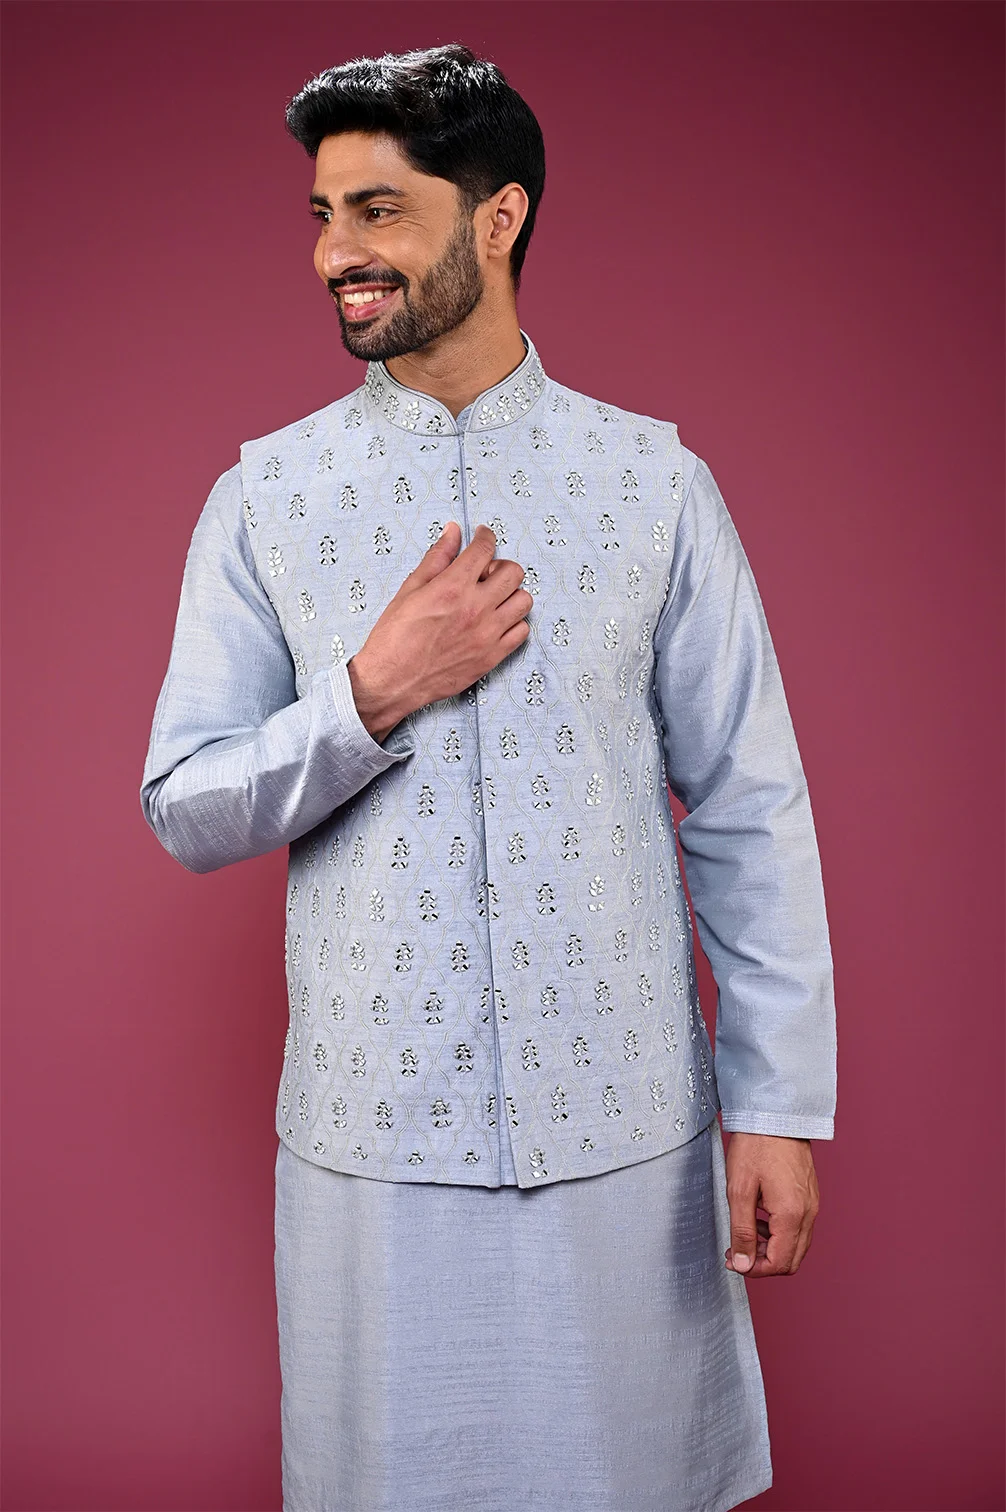 Cotton Fabric Blue Color Wedding Wear Kurta Pyjama With Jacket